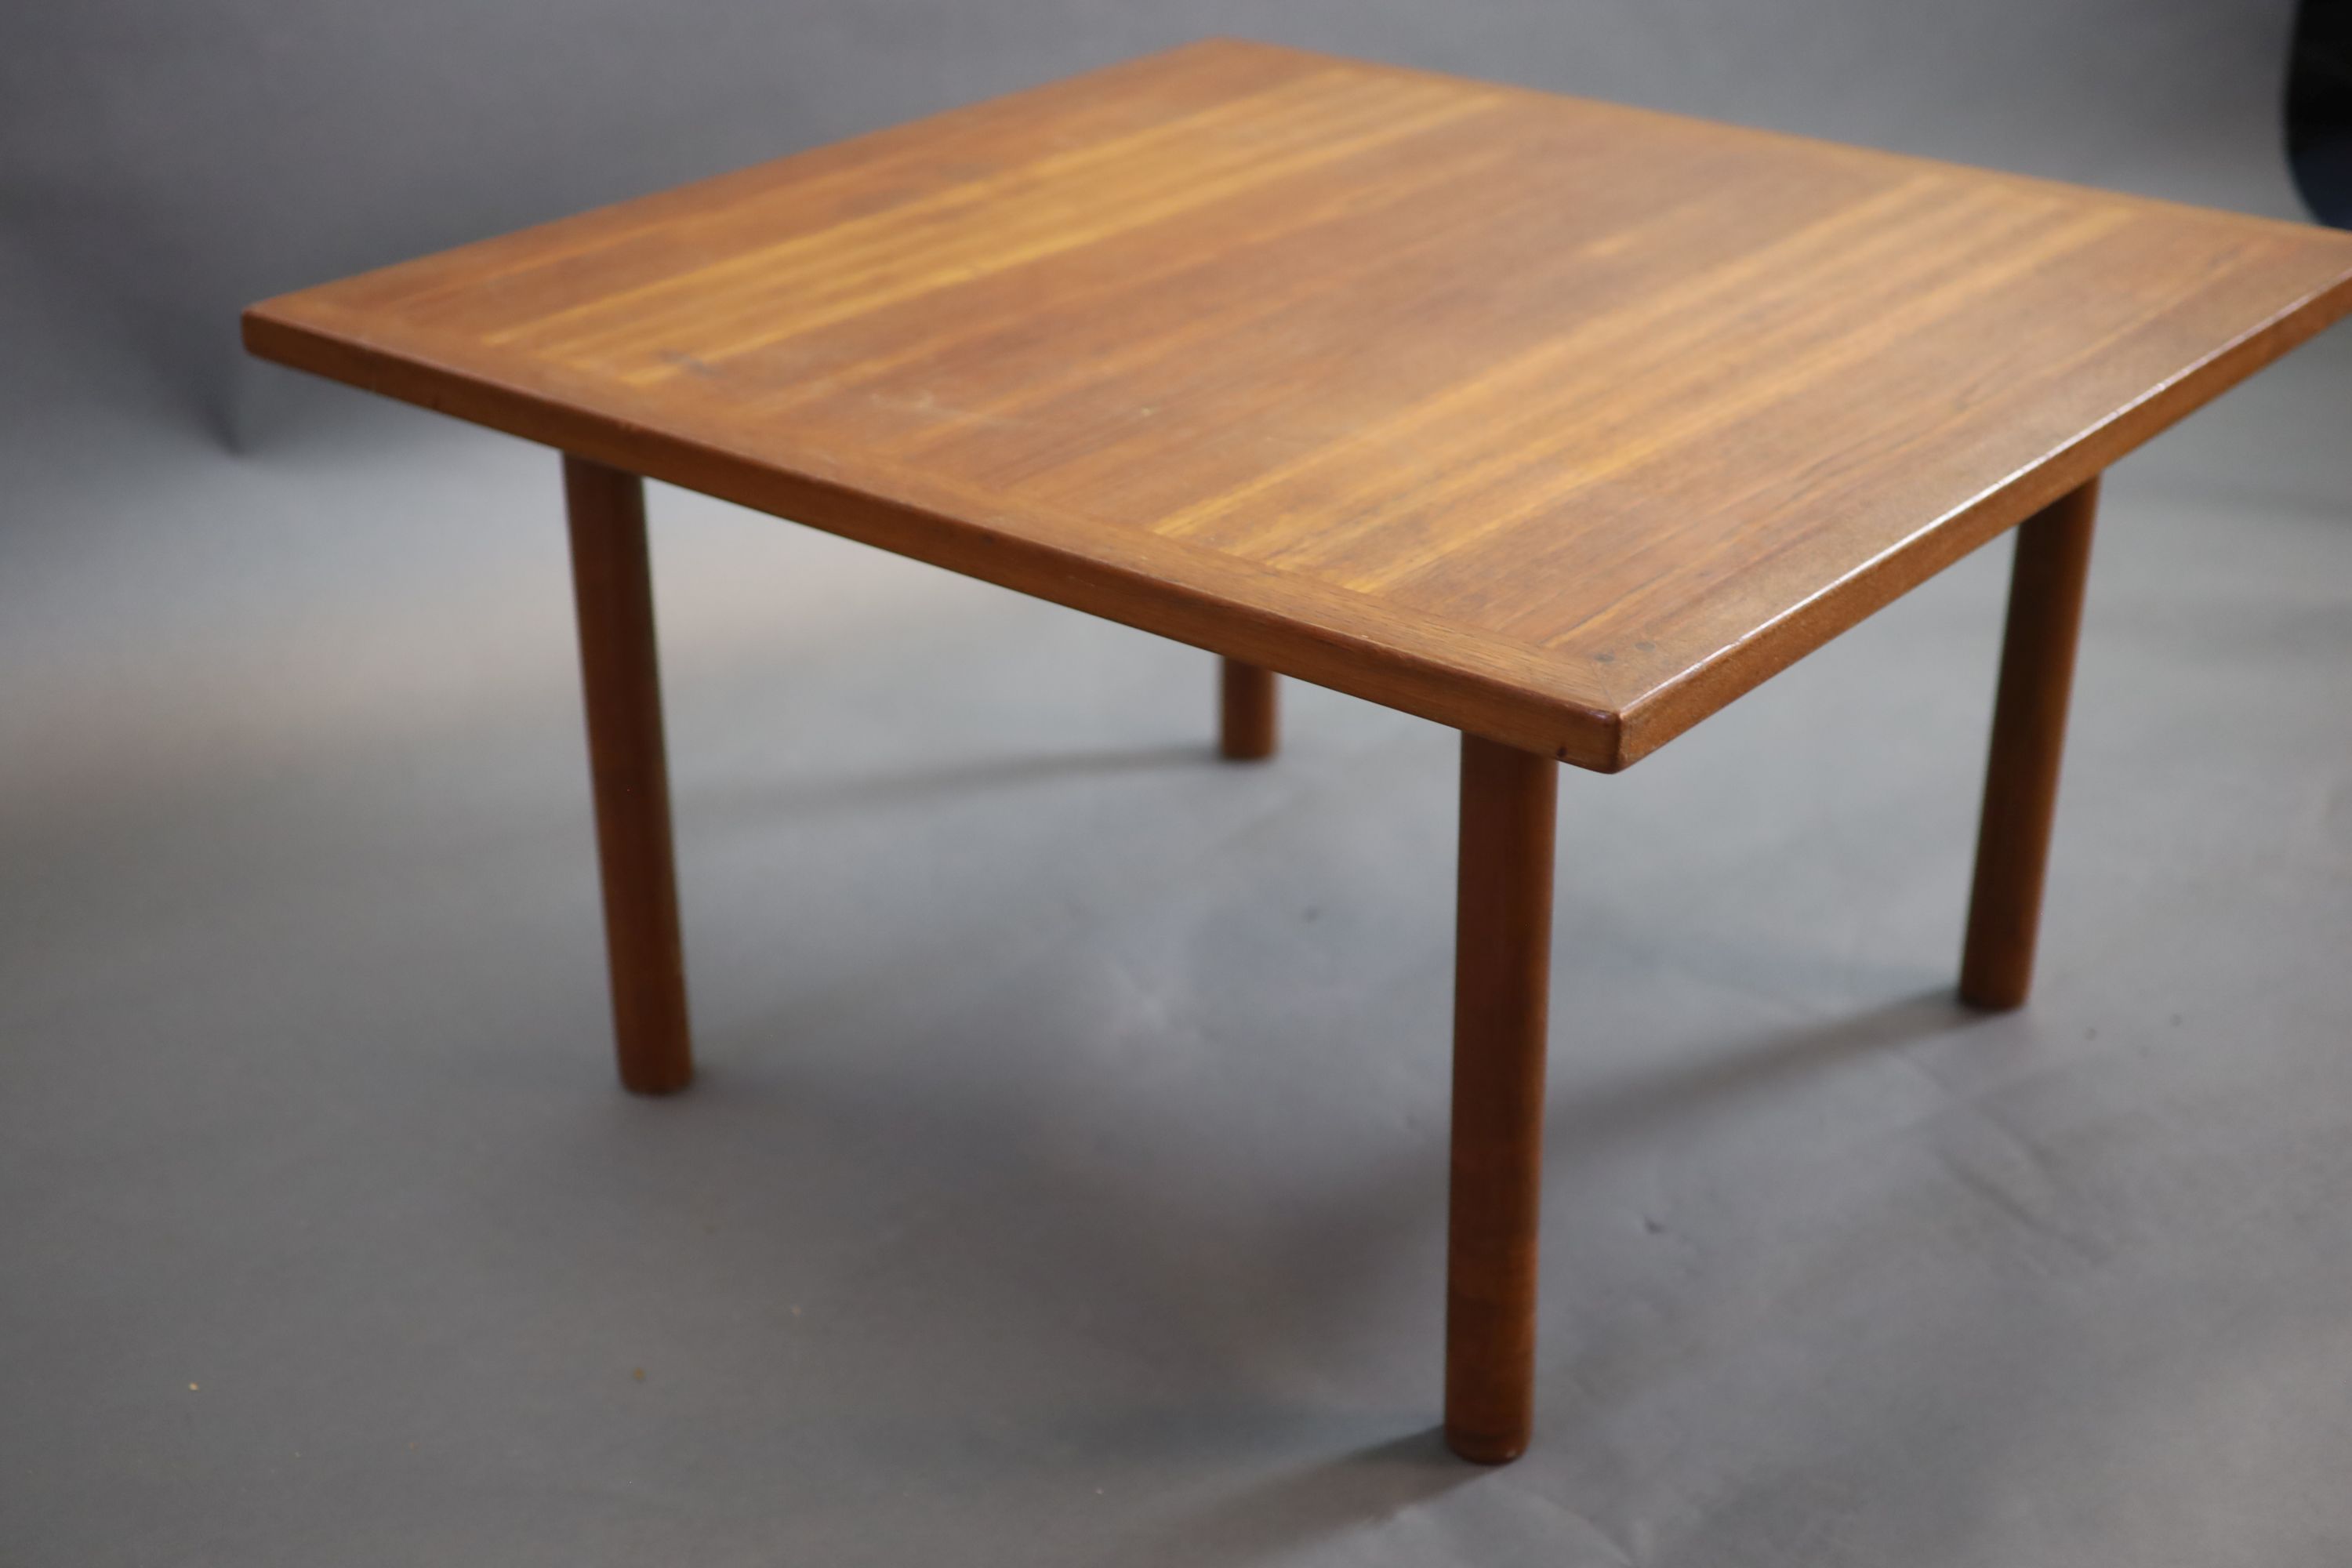 Hans Wegner for Andreas Tuck, a Danish teak coffee table, 85 x 85cm, 50cm high.